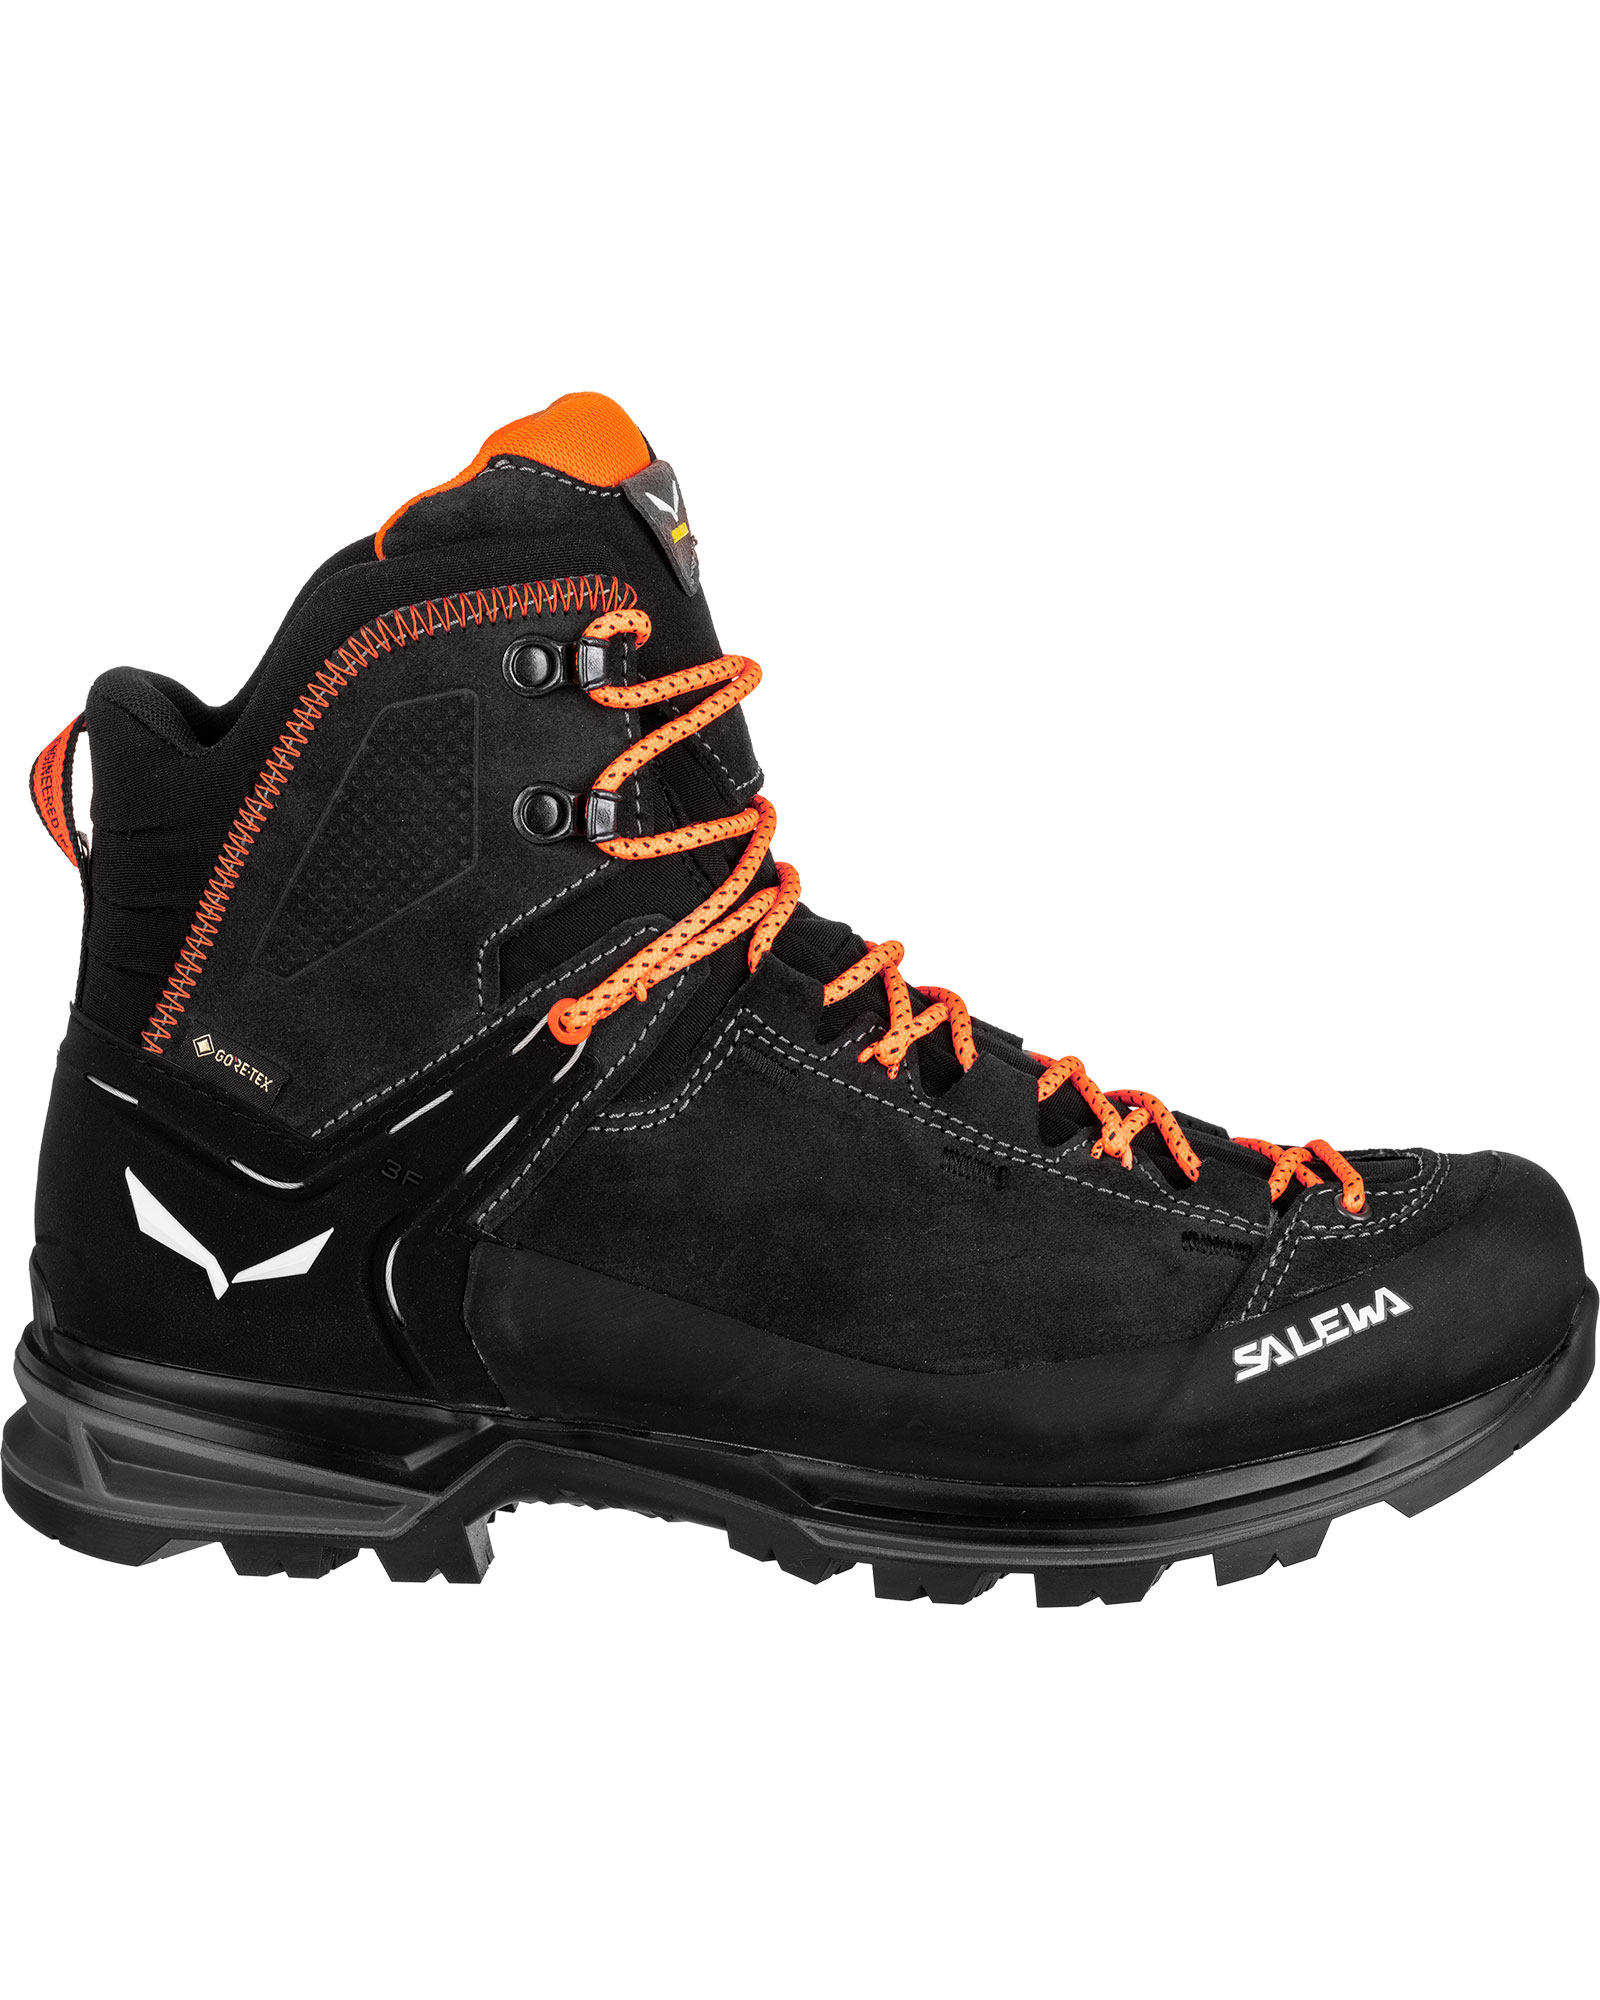 Salewa Mountain Trainer 2 Mid GORE TEX Men’s Boots - Onyx UK 10.5